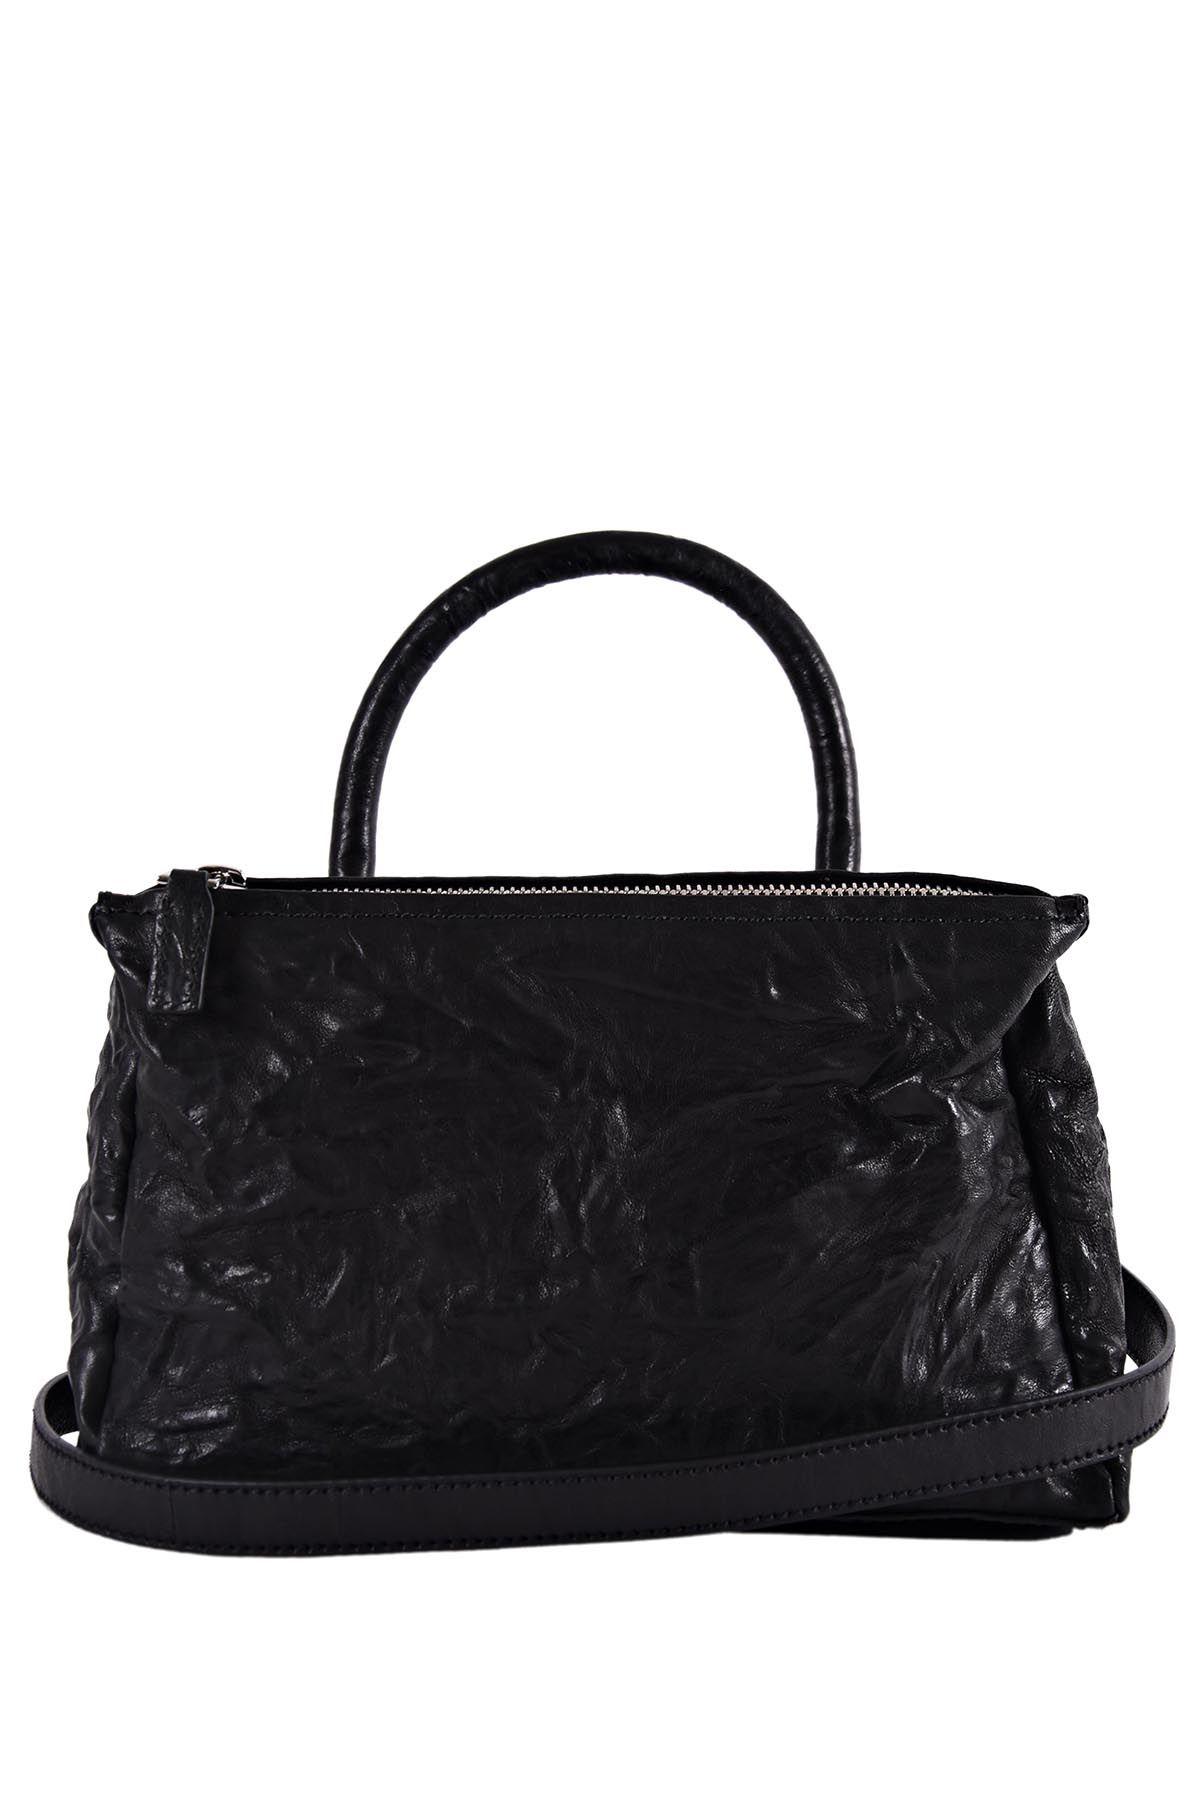 Givenchy Pandora Small Tote In Black | ModeSens